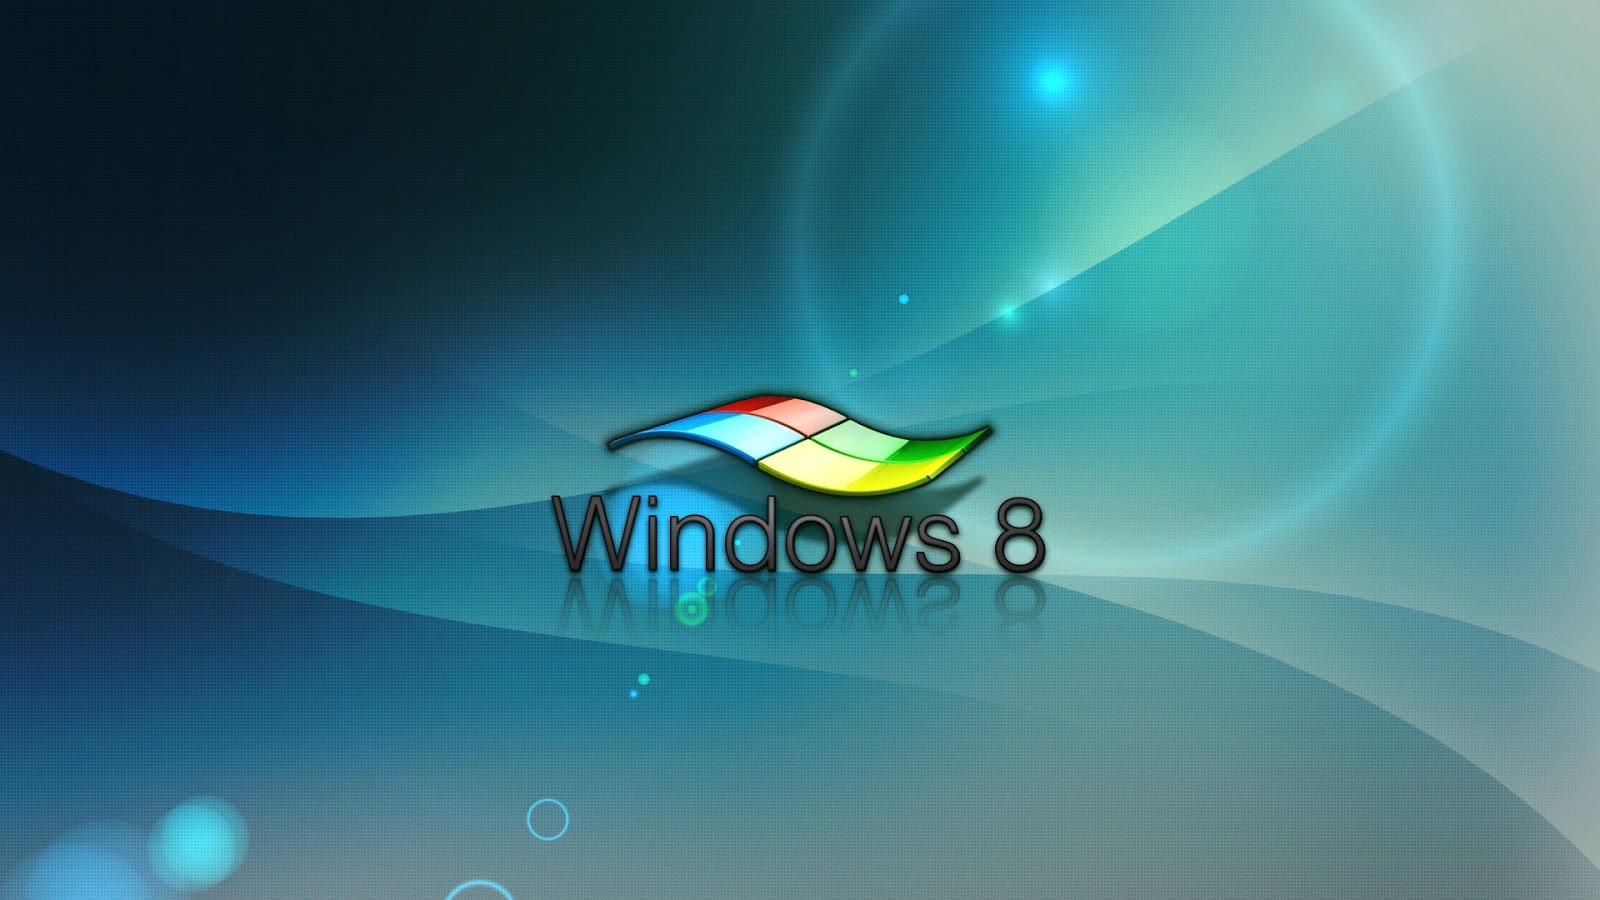 windows 8 wallpaper hd 1080p free download #3